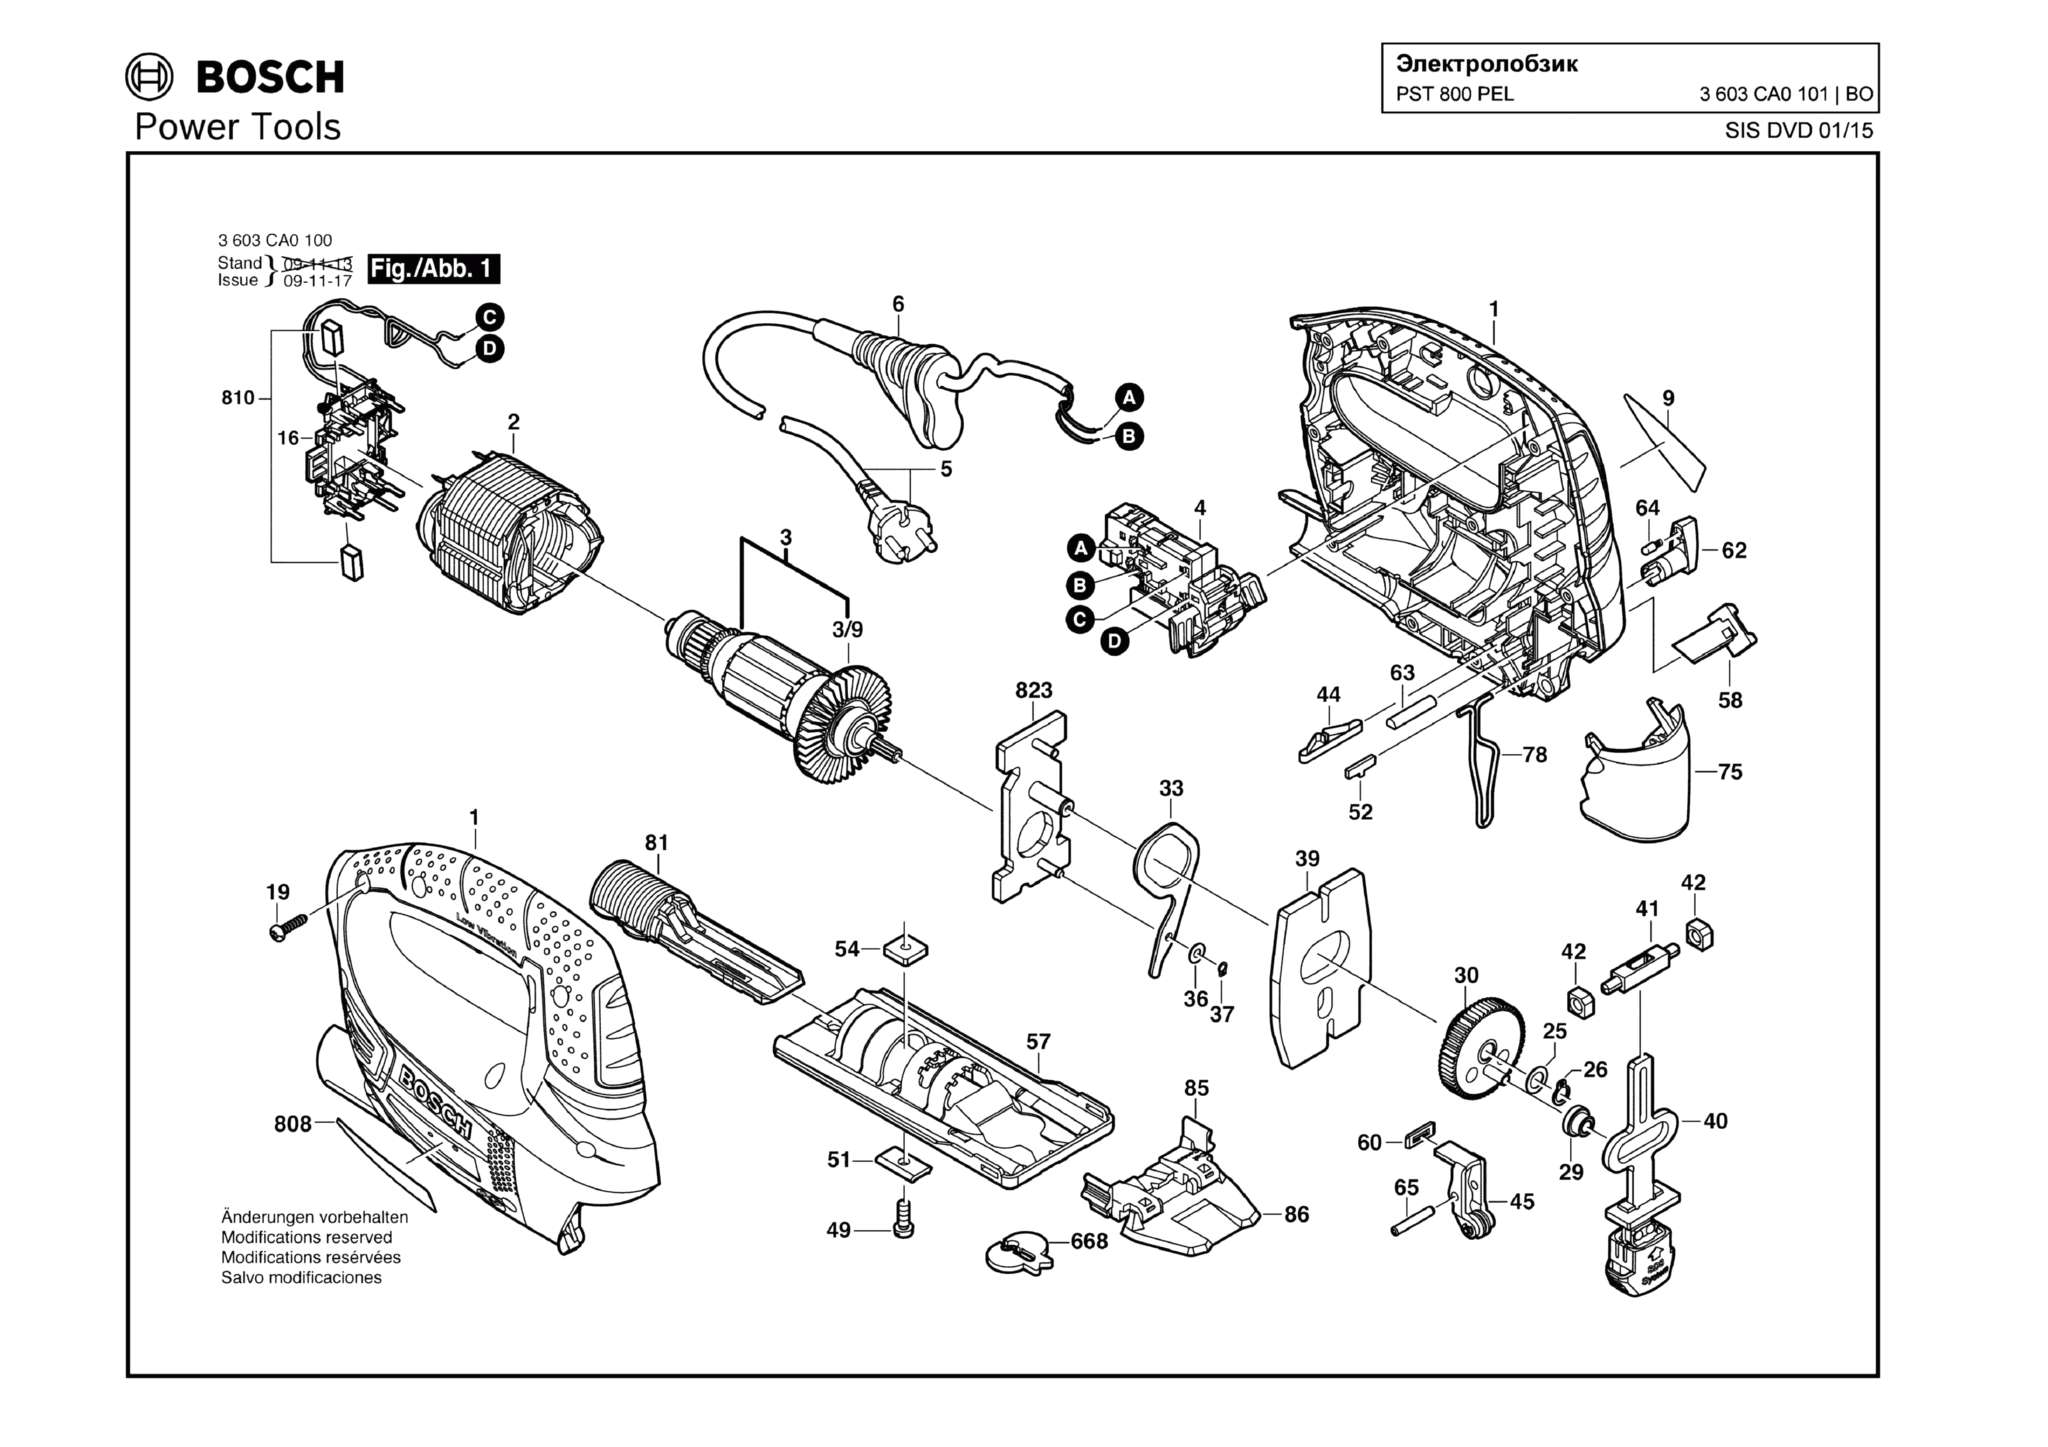 Запчасти, схема и деталировка Bosch PST 800 PEL (ТИП 3603CA0101)